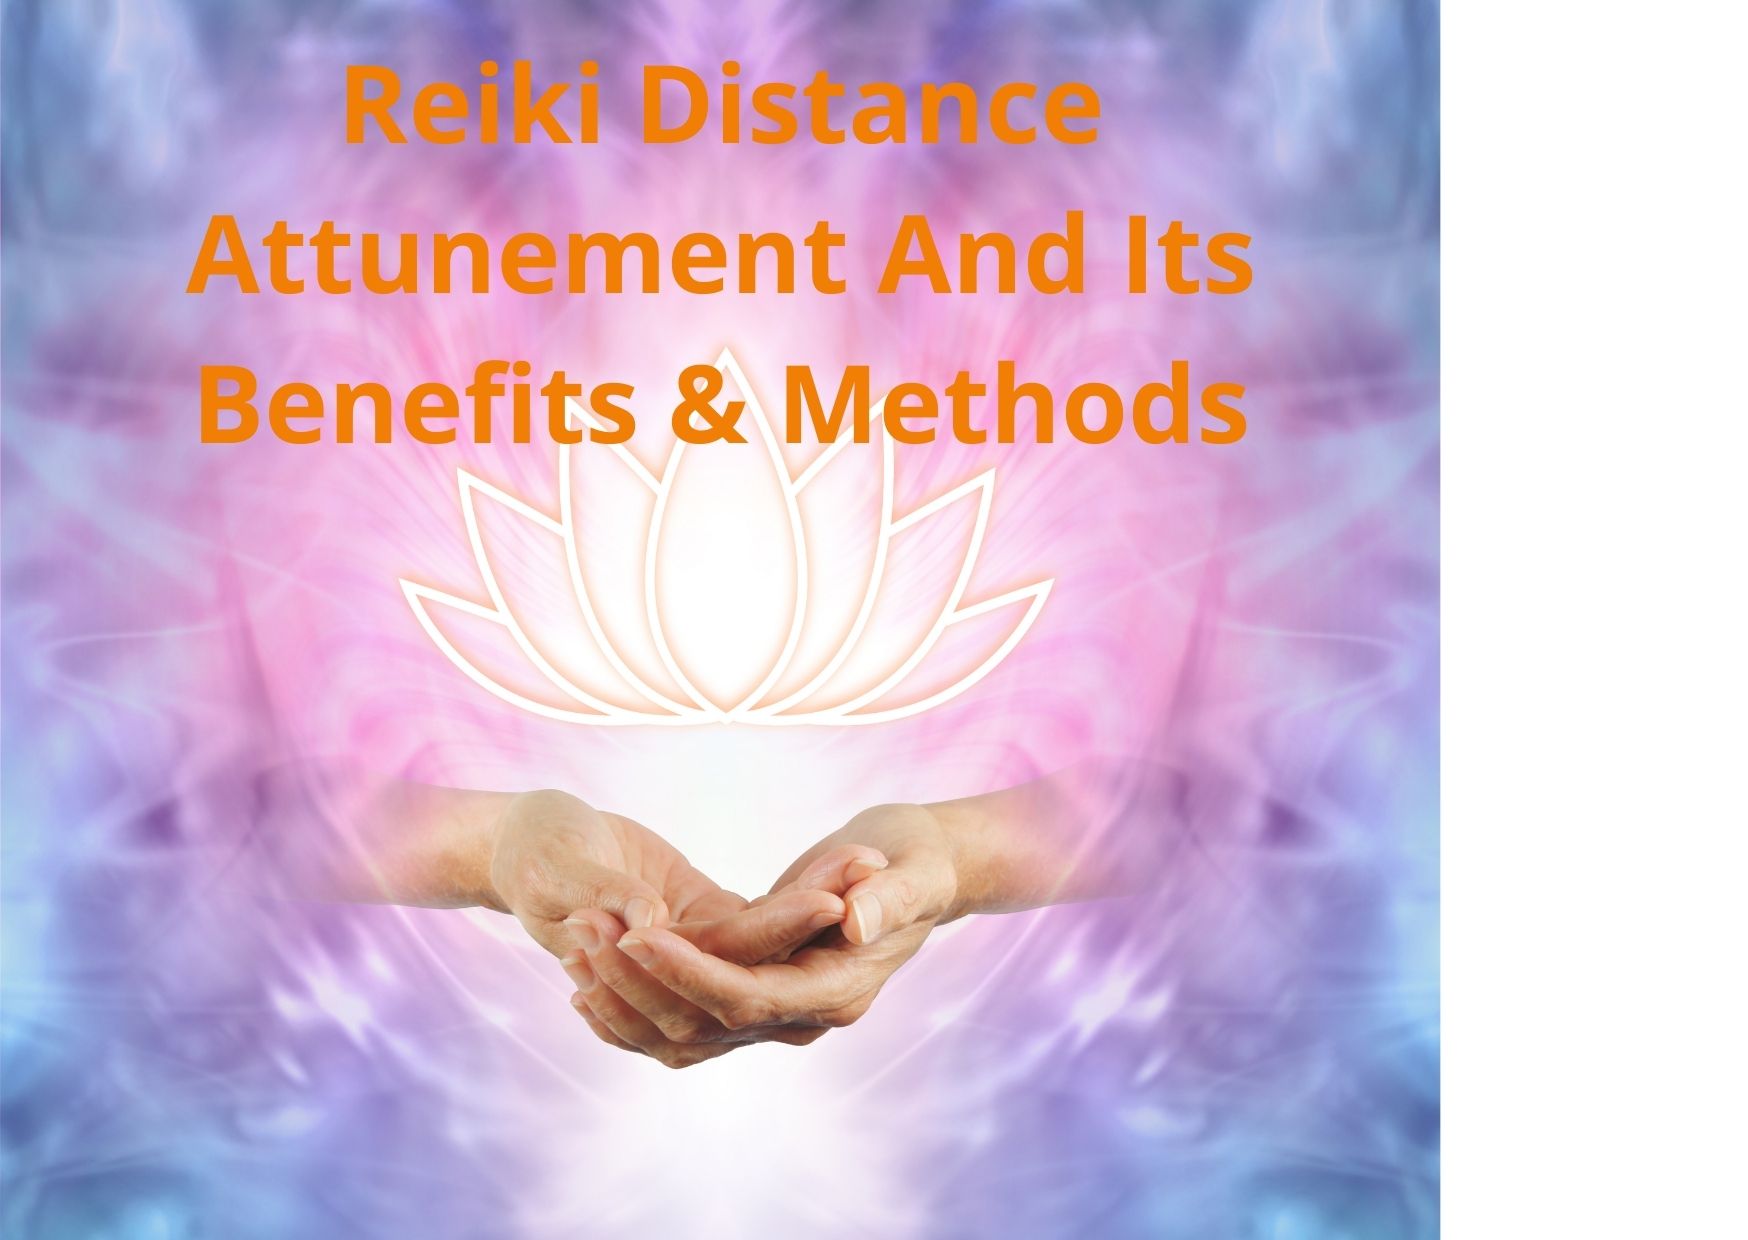 Reiki Distance Attunement And Its Benefits & Methods